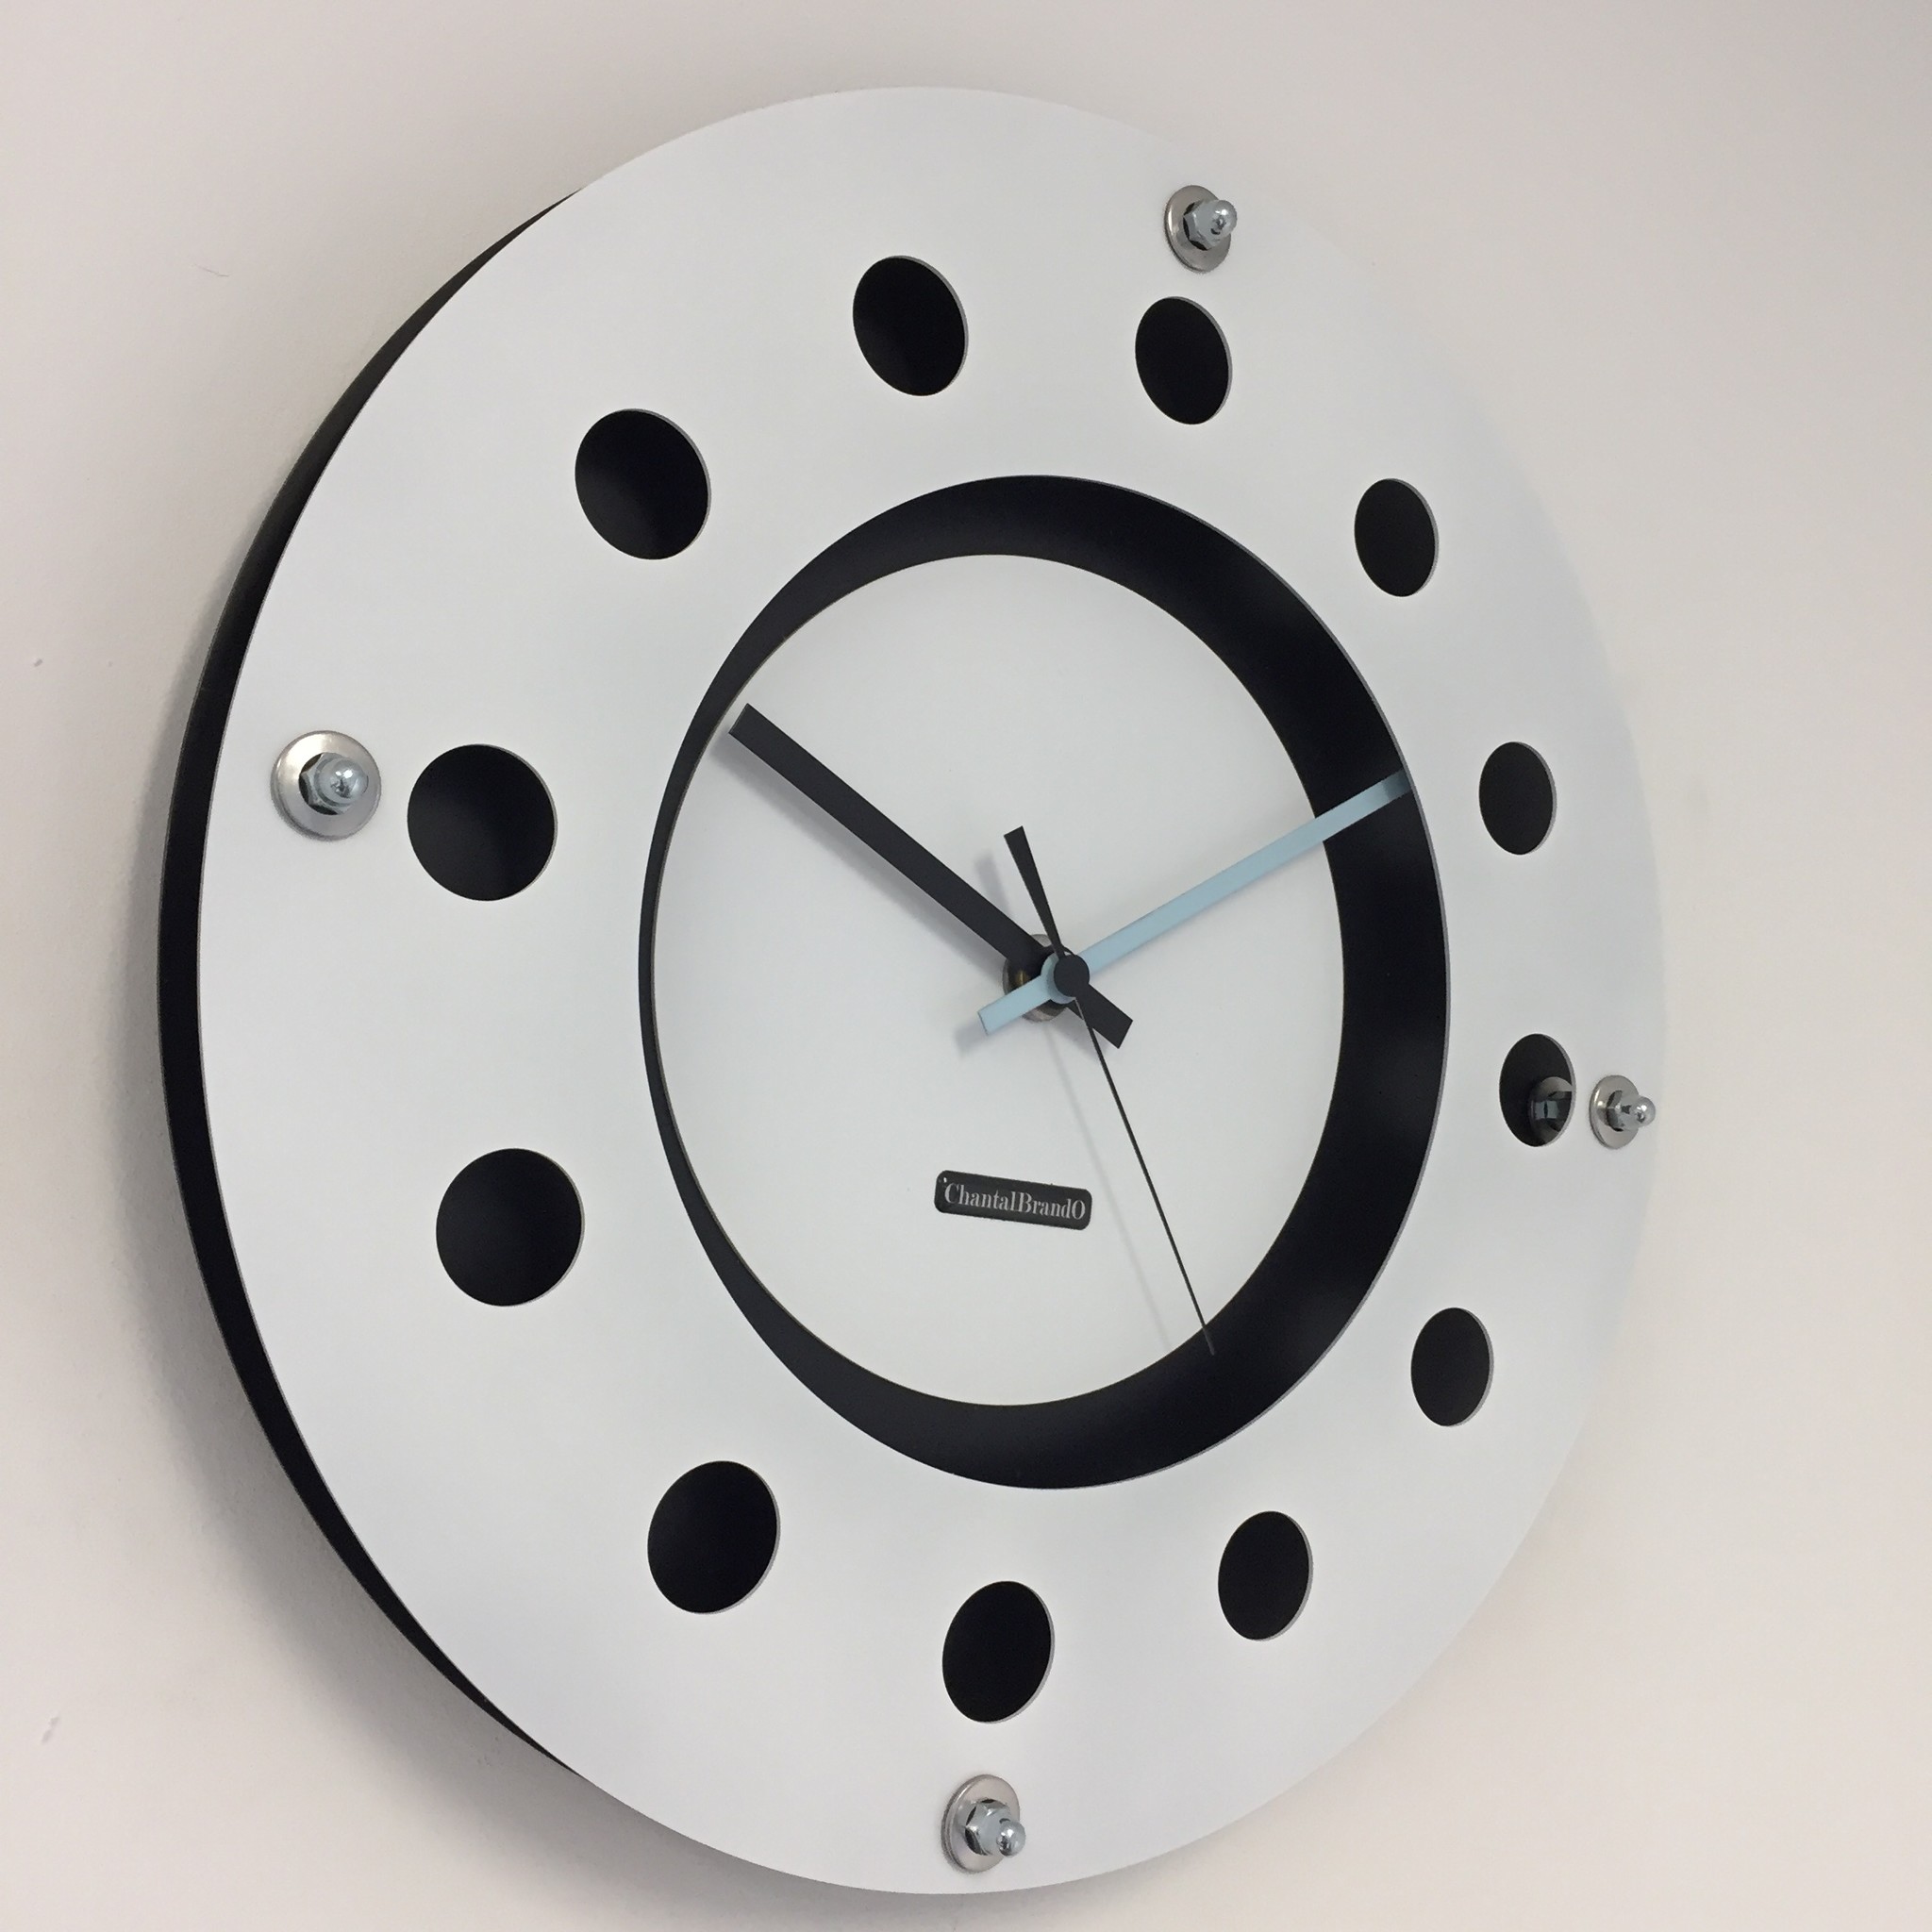 ChantalBrandO Design - Wall clock White Flens Mecanica Full Black With White Small Inside Circle Blue -Black Pointer Modern Dutch Design Handmade 40 Cm